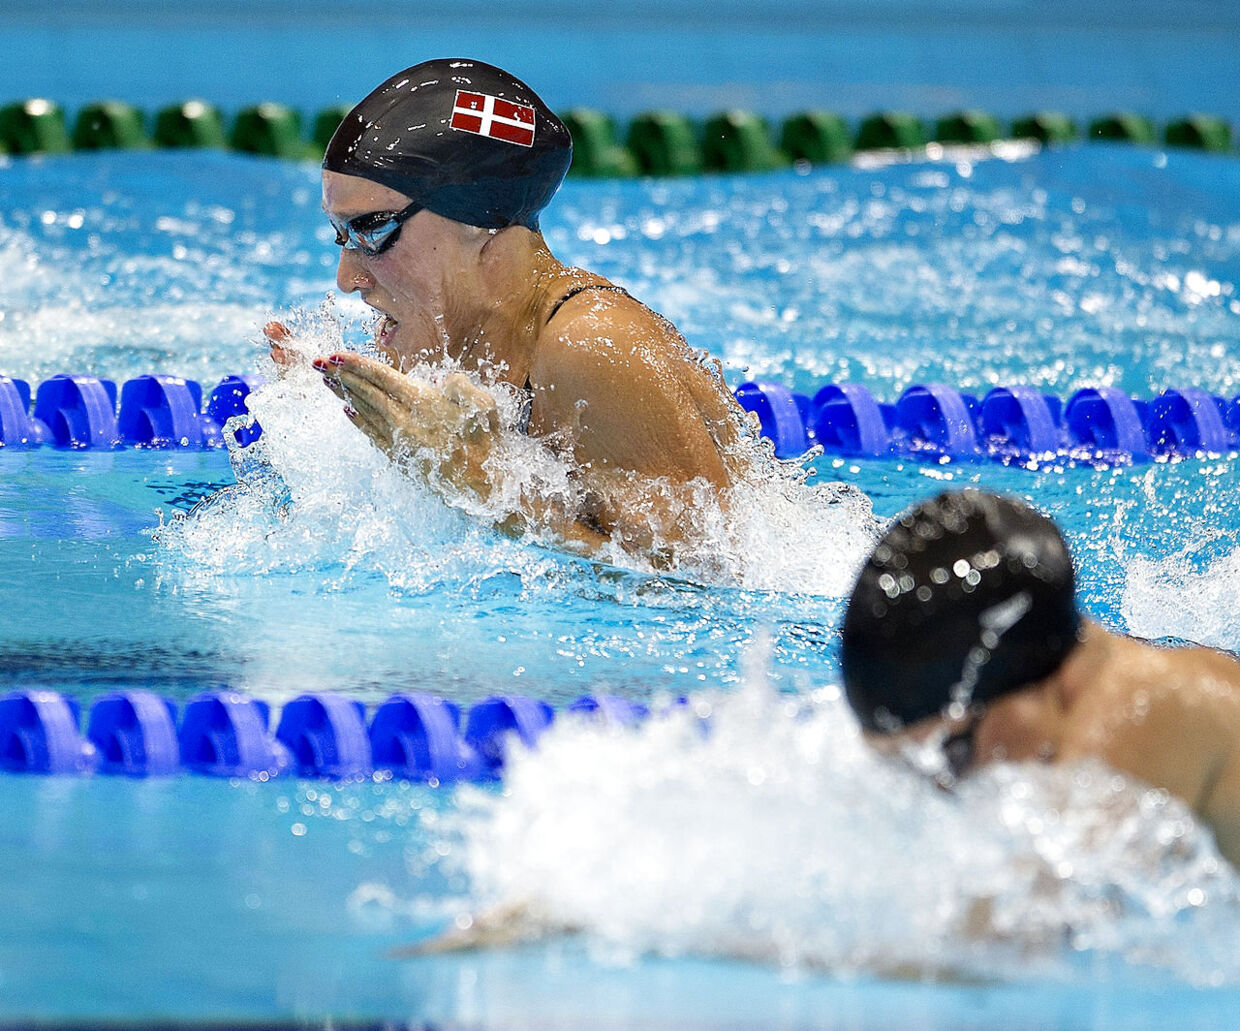 OL-London: Svømning.: Finale 100 m Brystsvømning: Rikke Møller Pedersen i sit finaleheat